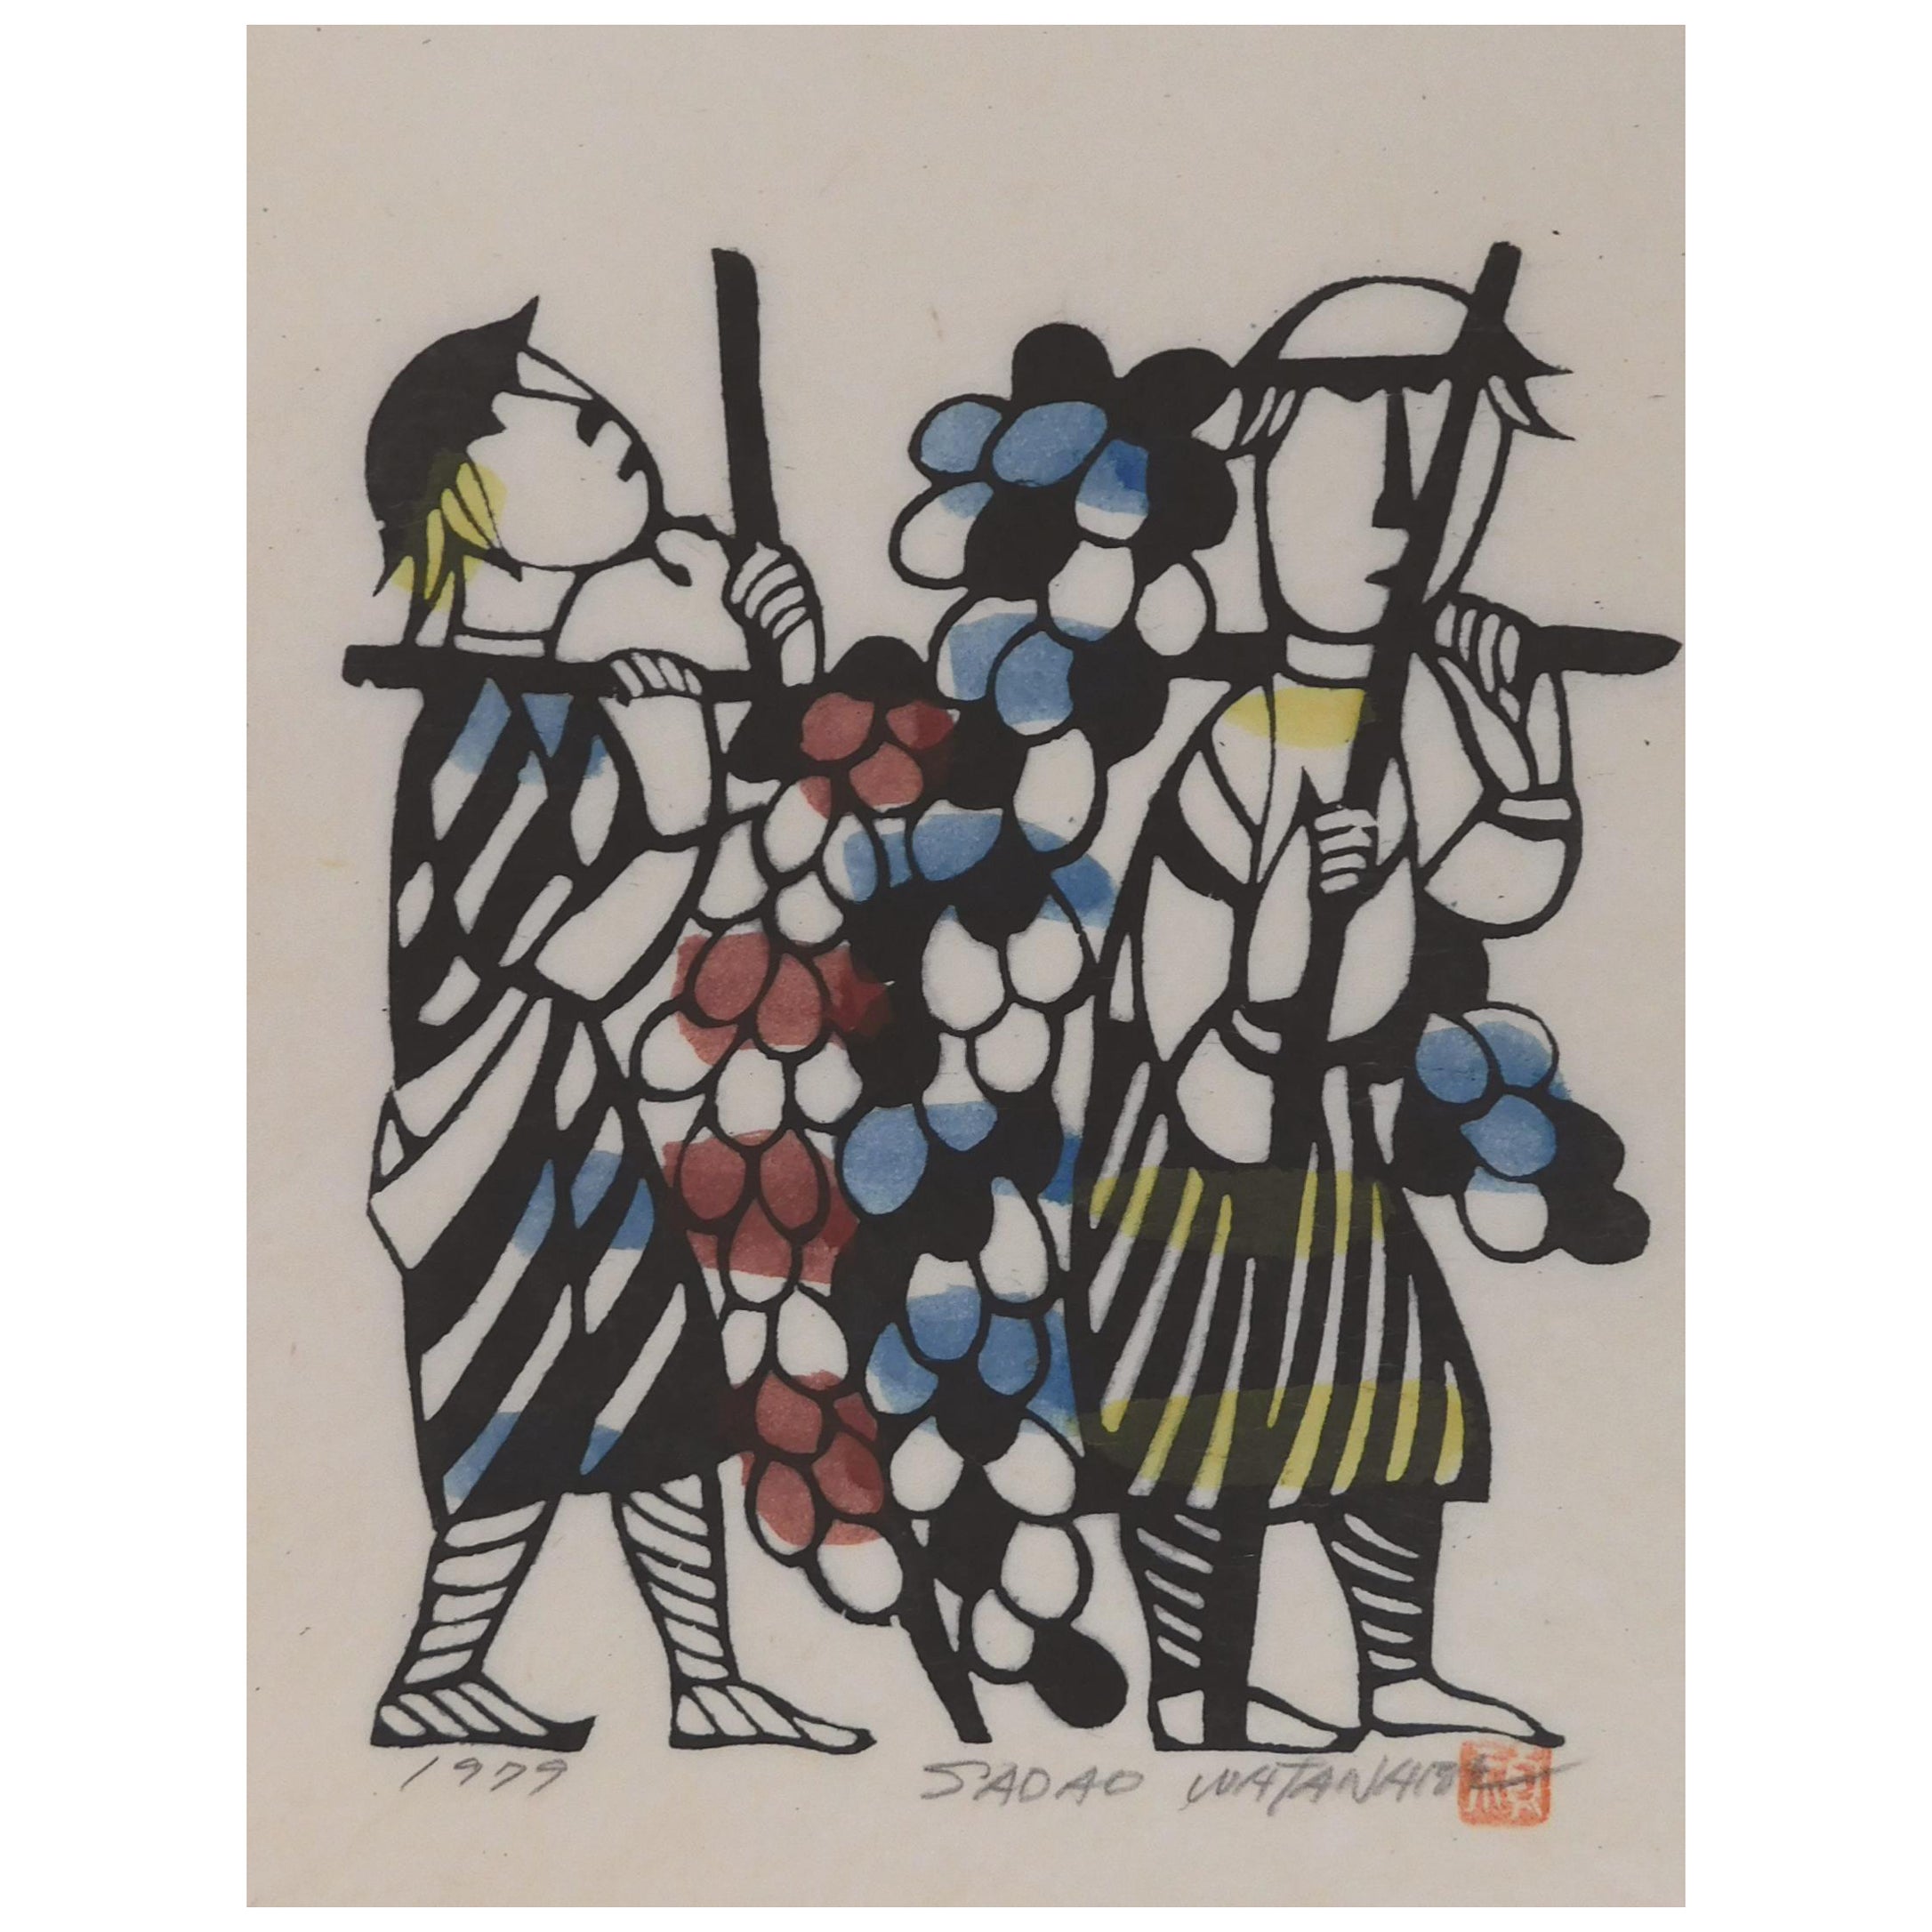 Sadao Watanabe Original Stencil Print, 1979 - Harvesting the Grape in Canaan